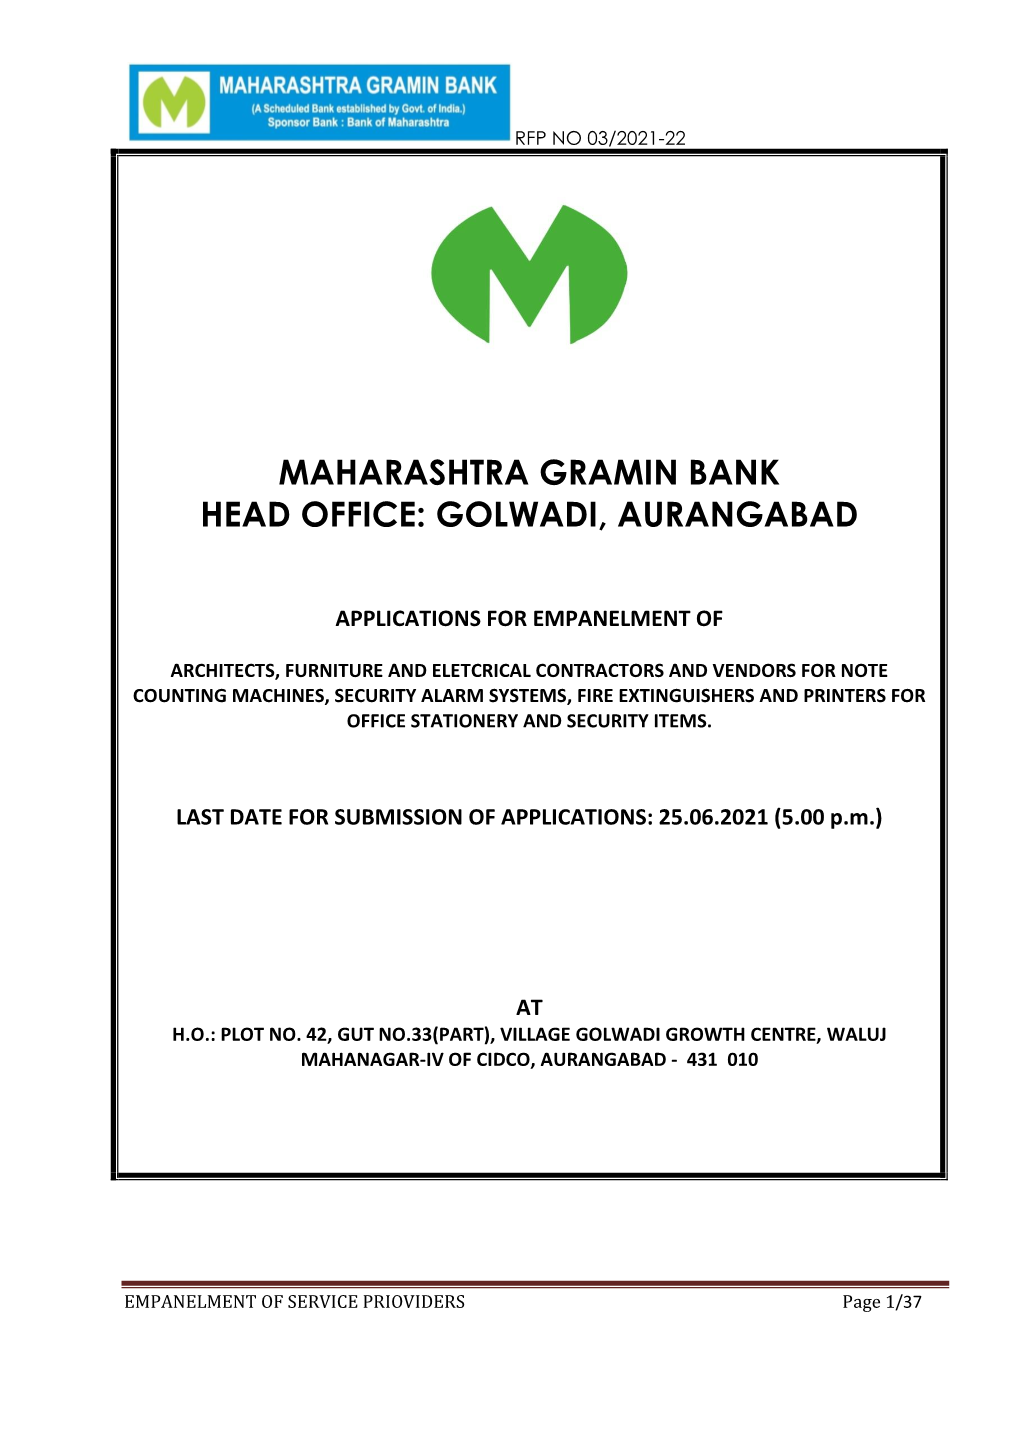 Maharashtra Gramin Bank Head Office: Golwadi, Aurangabad